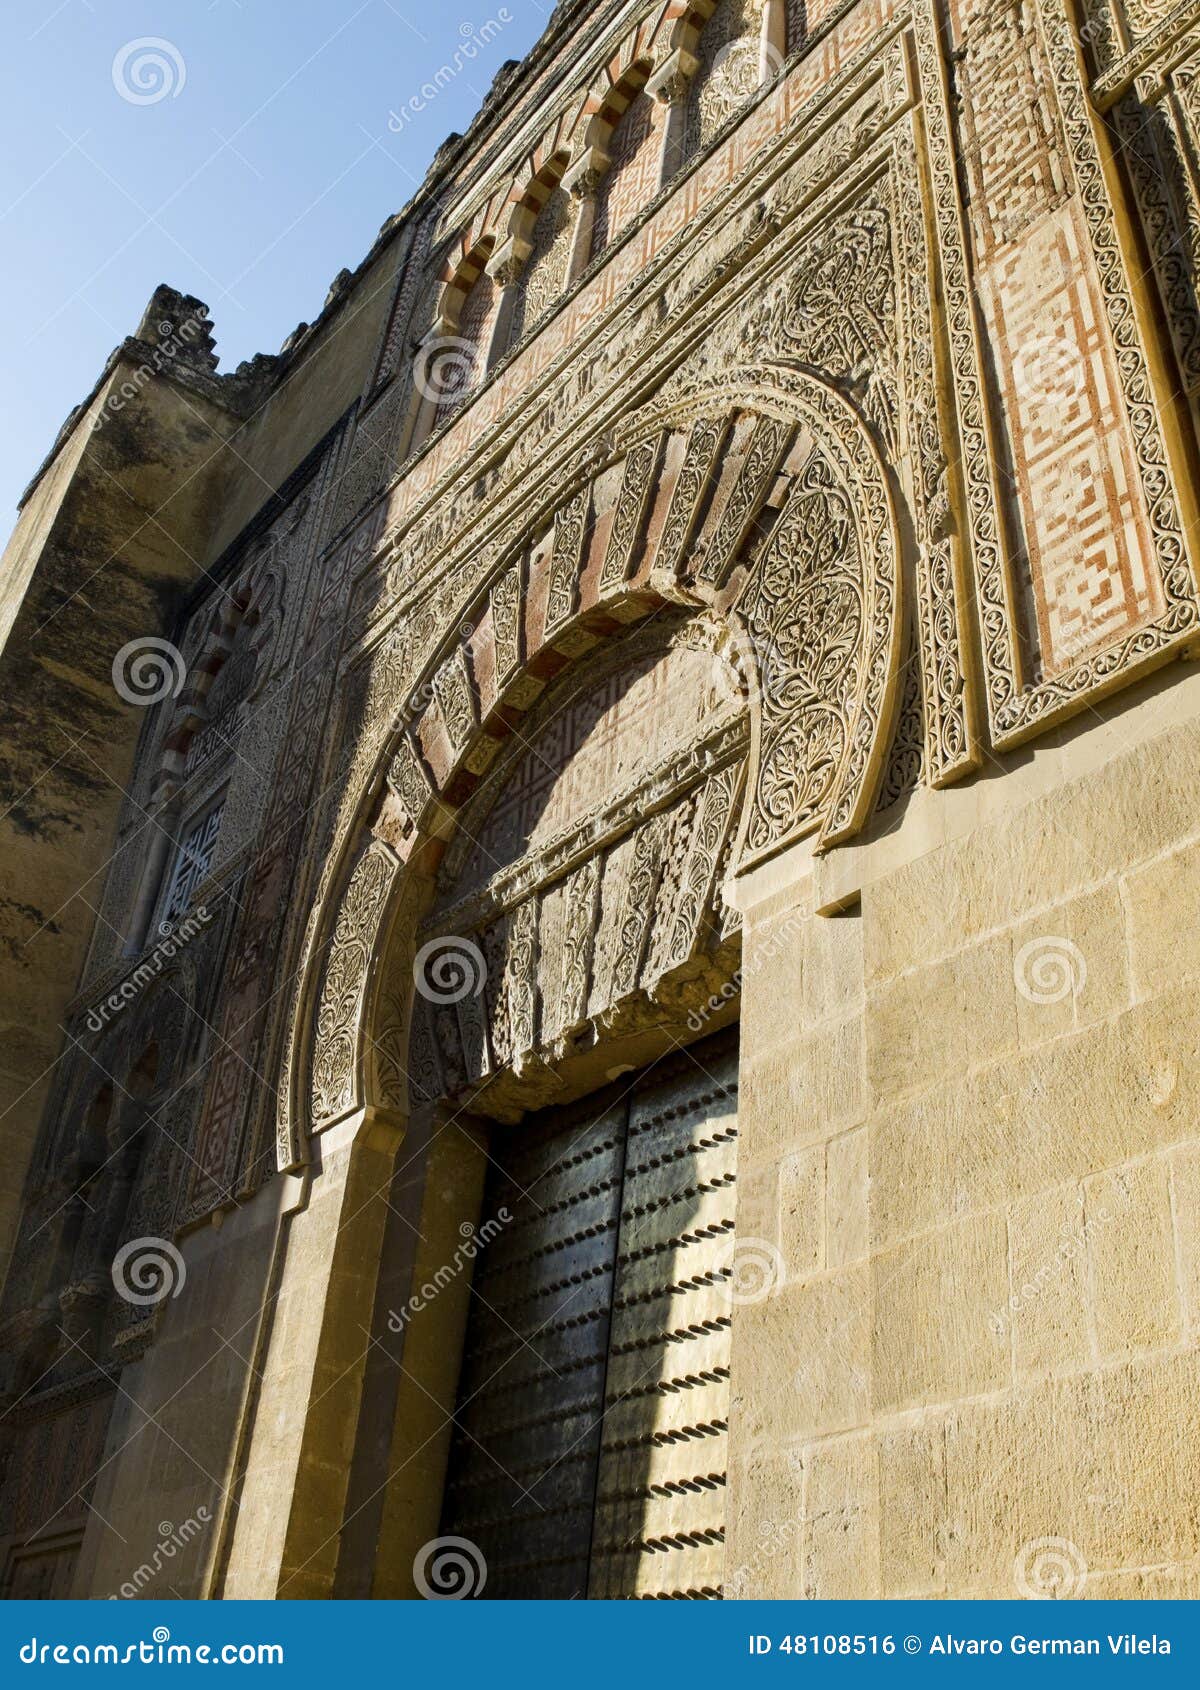 puerta del espiritu santo of cathedral mosque, mezquita de cordo